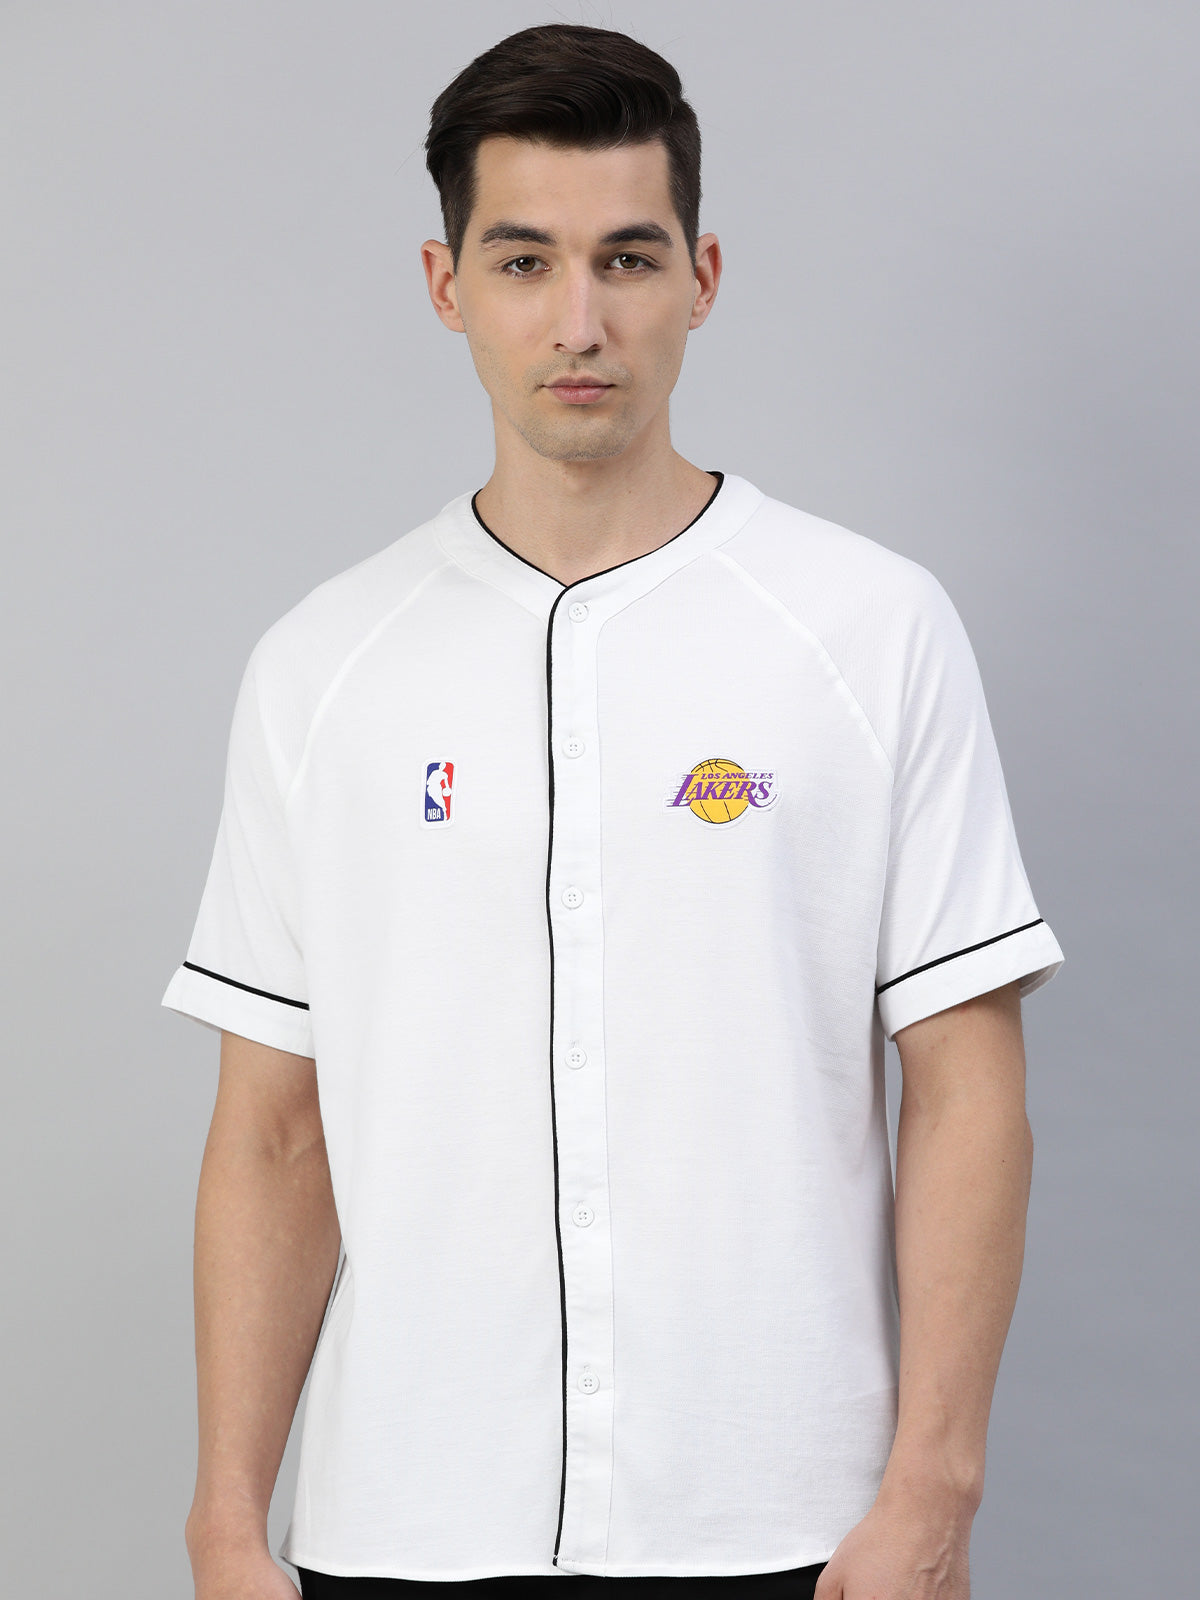 LaLaLandTshirts Houston Asterisks Cheat Stros Los Angeles Baseball Fan T Shirt Premium / White / X-Large